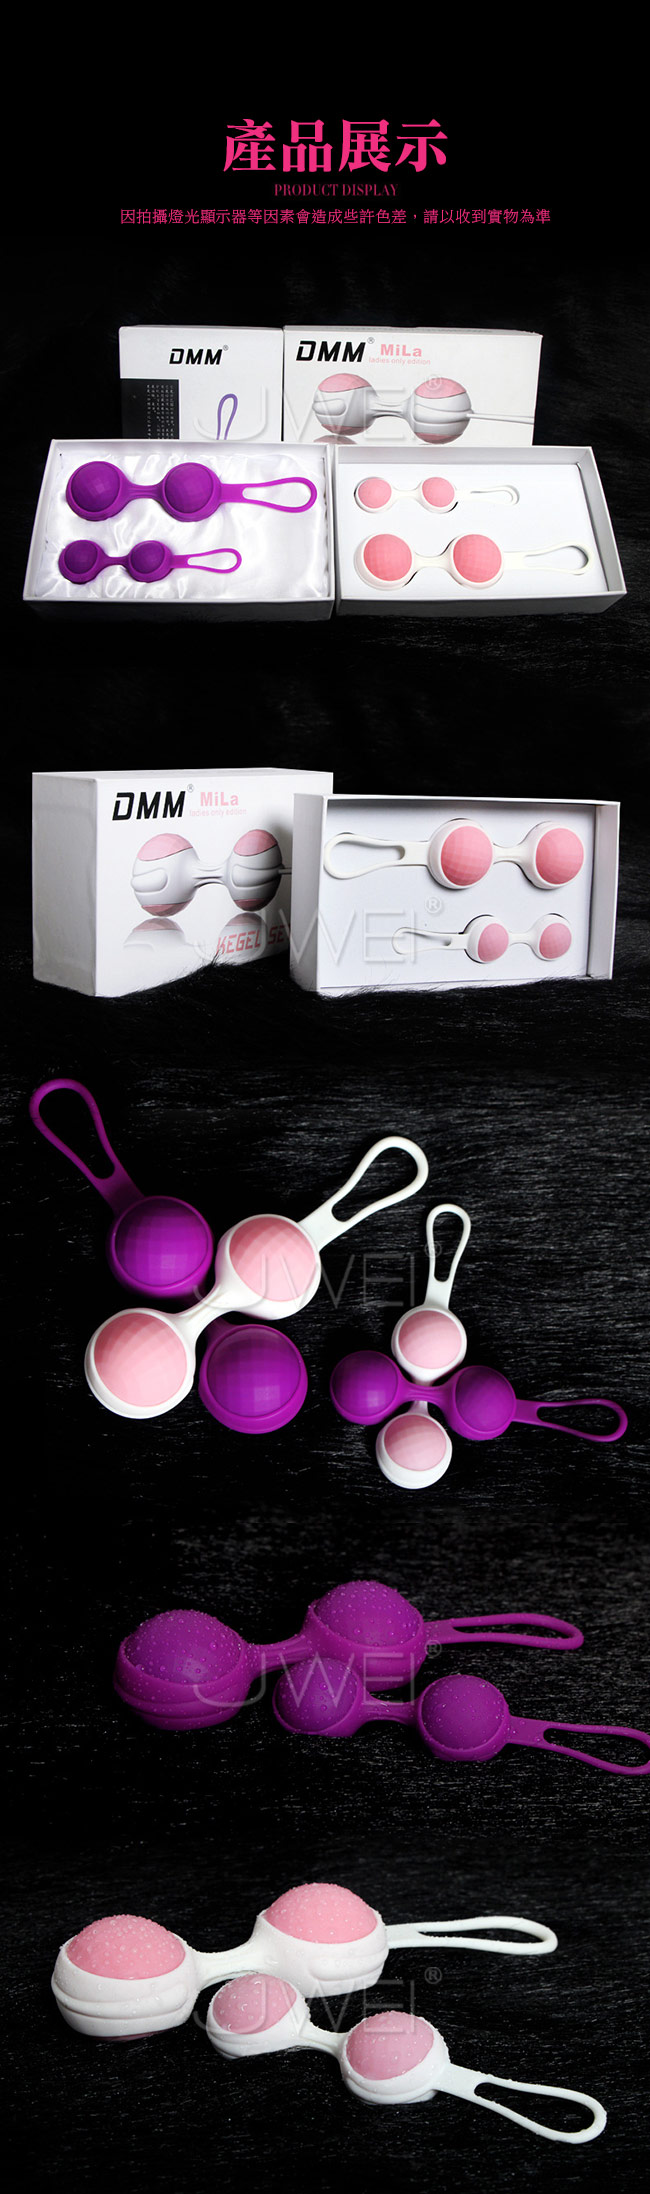 DMM．Mila 階段訓練凱格爾縮陰球套裝組-粉色